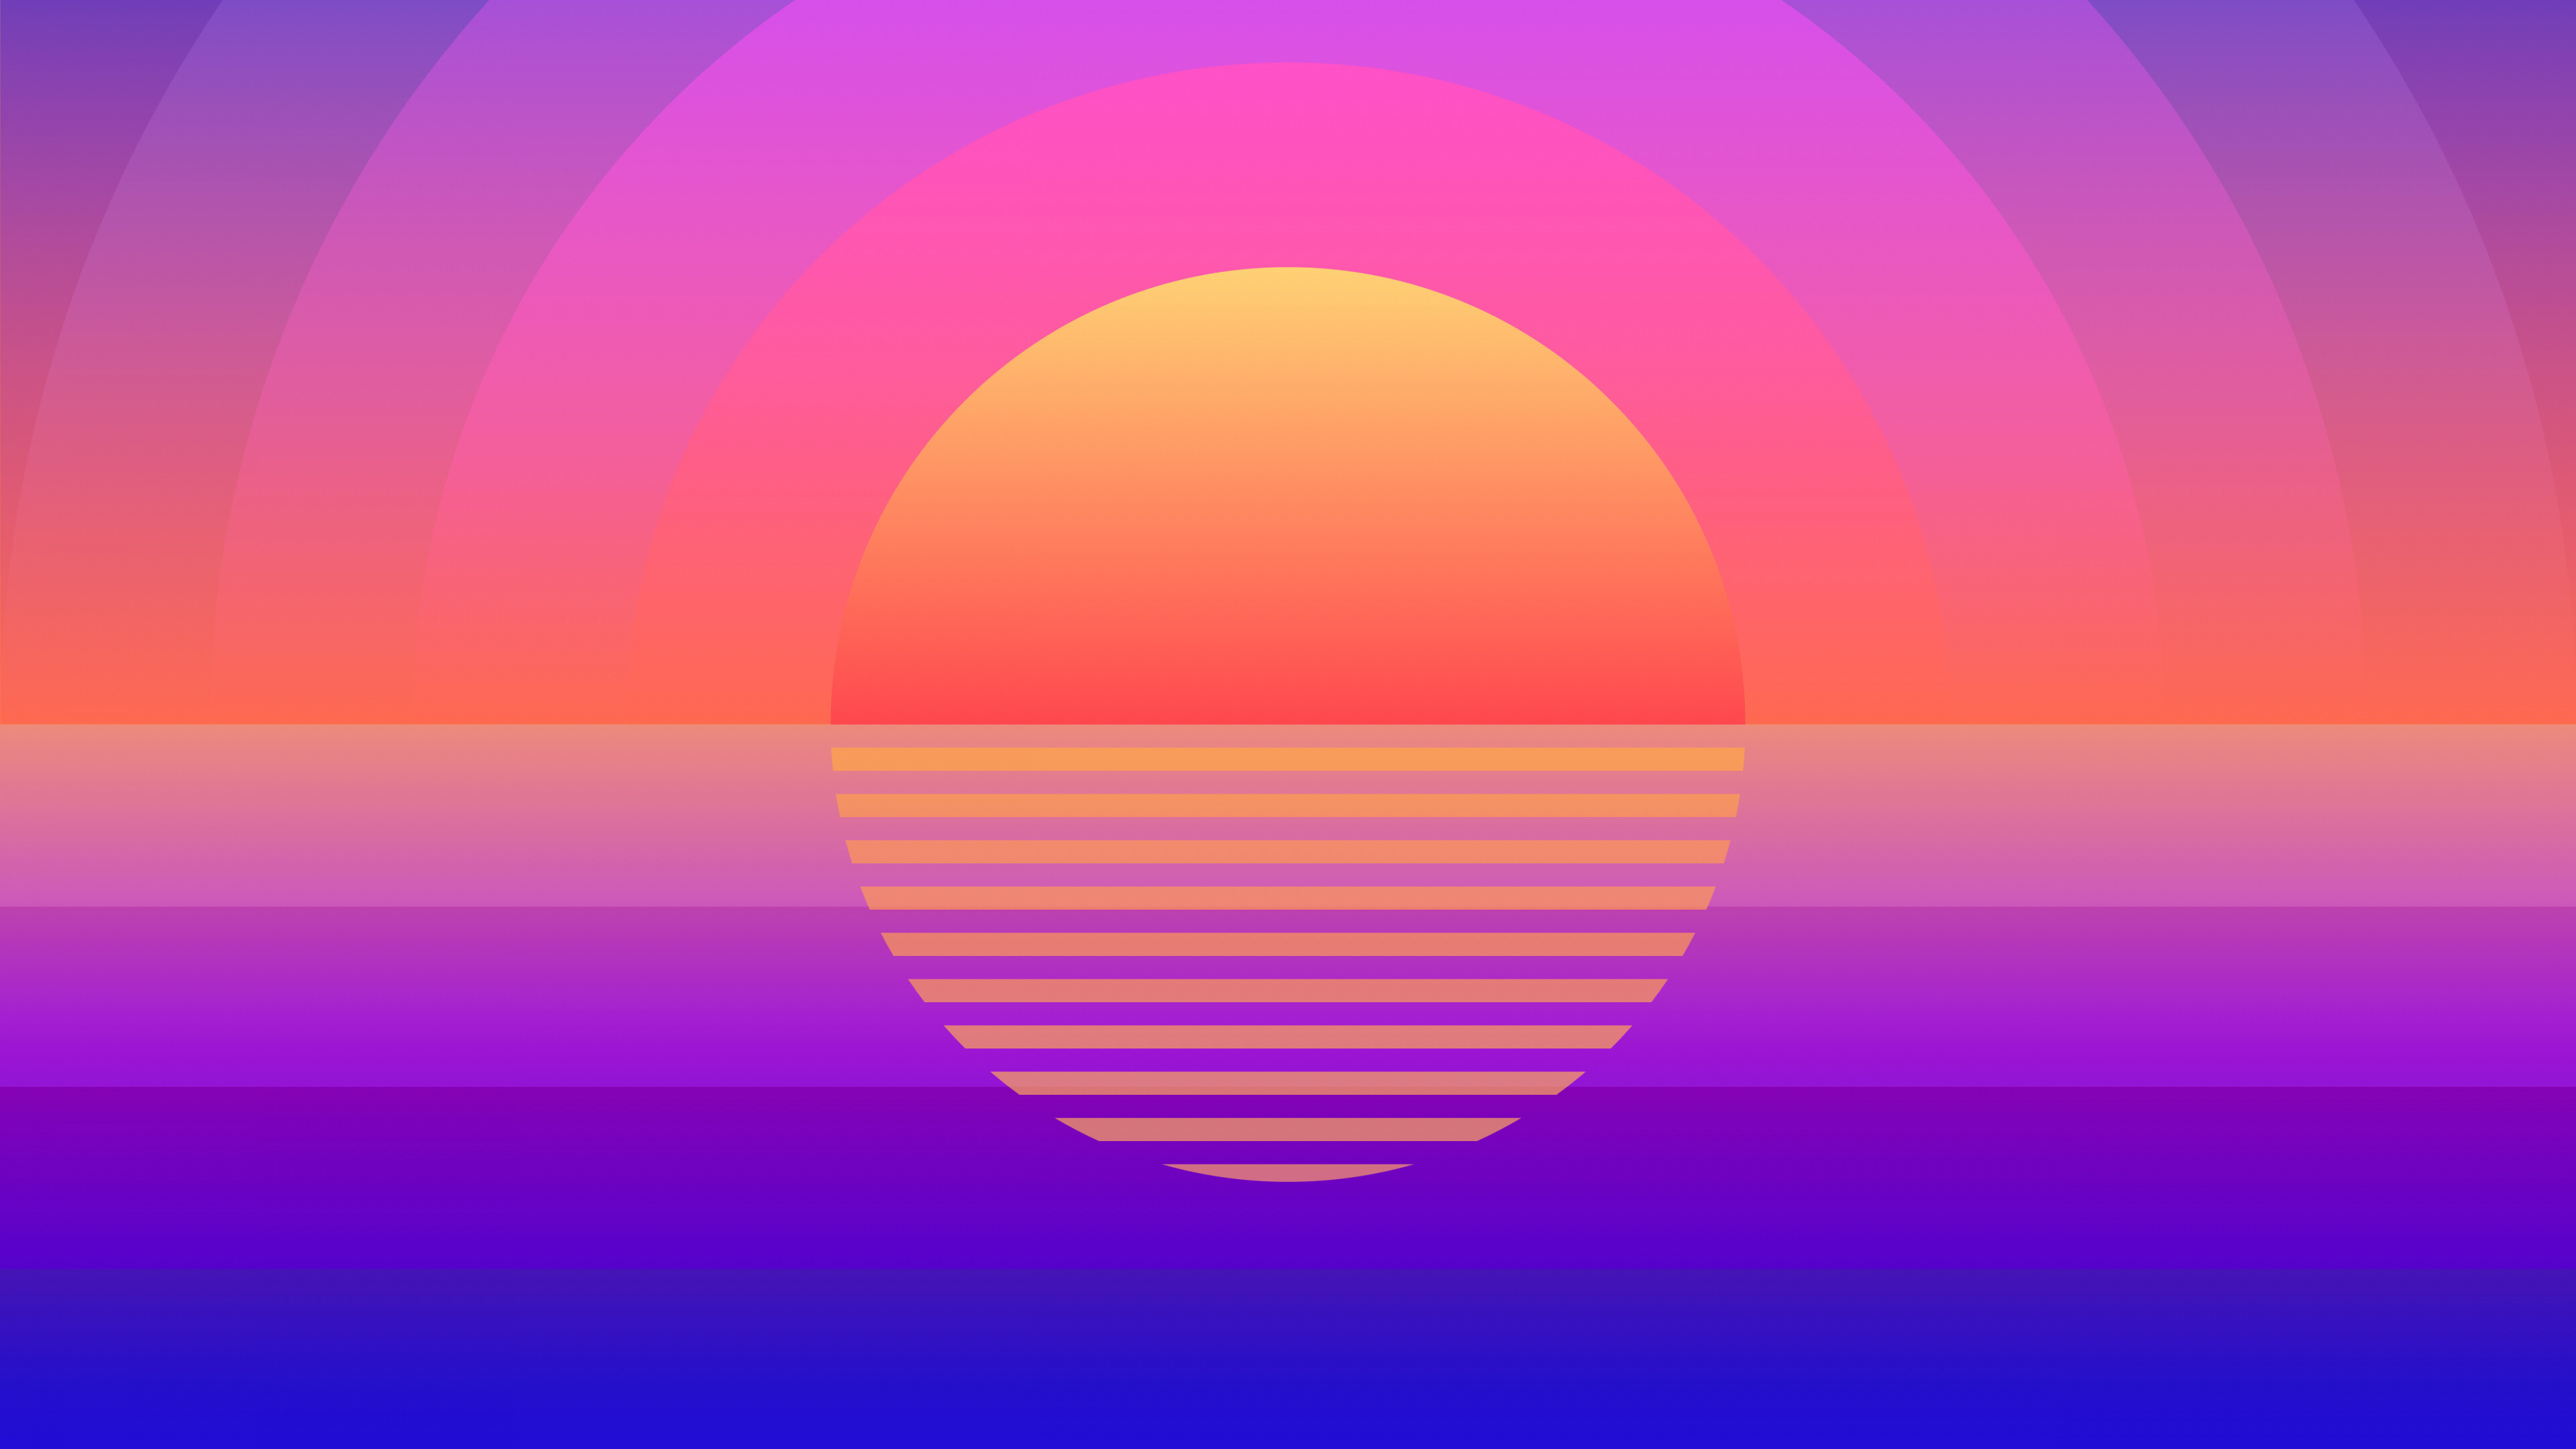 Geometry: Sun, Sunset, Retro art, Parallel stripes, Lines. 3840x2160 4K Wallpaper.